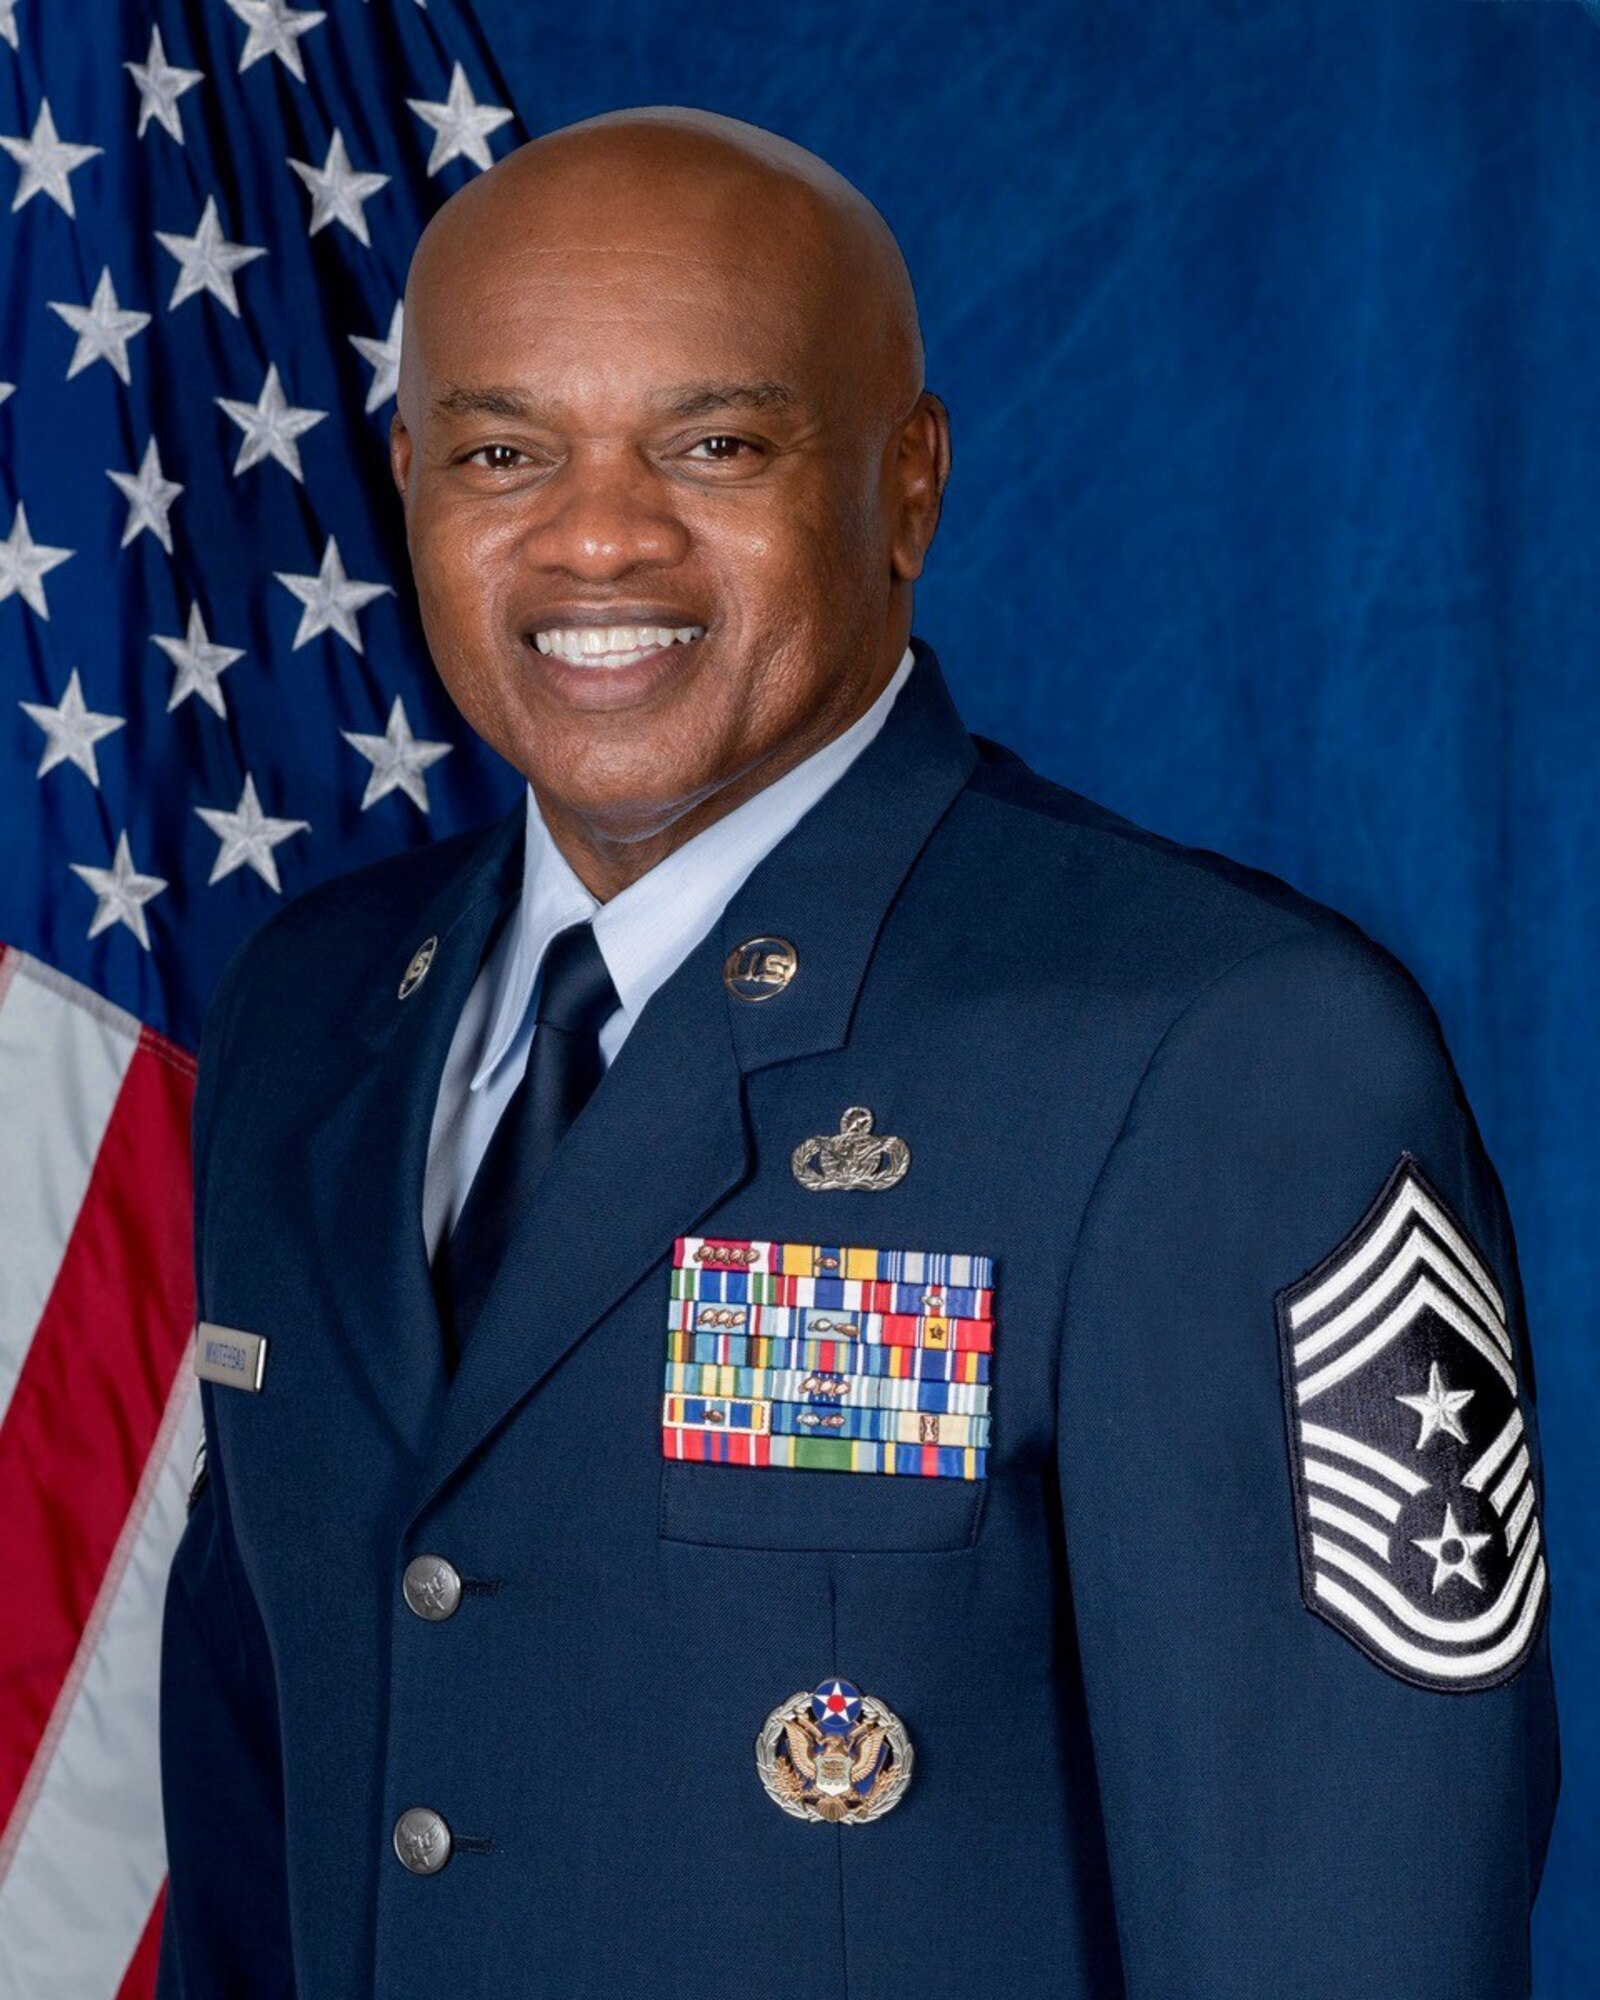 Chief Master Sgt. Tony L. Whitehead was named senior enlisted advisor for the National Guard Bureau by Gen. Daniel Hokanson, chief of the National Guard Bureau, Aug. 3, 2020.